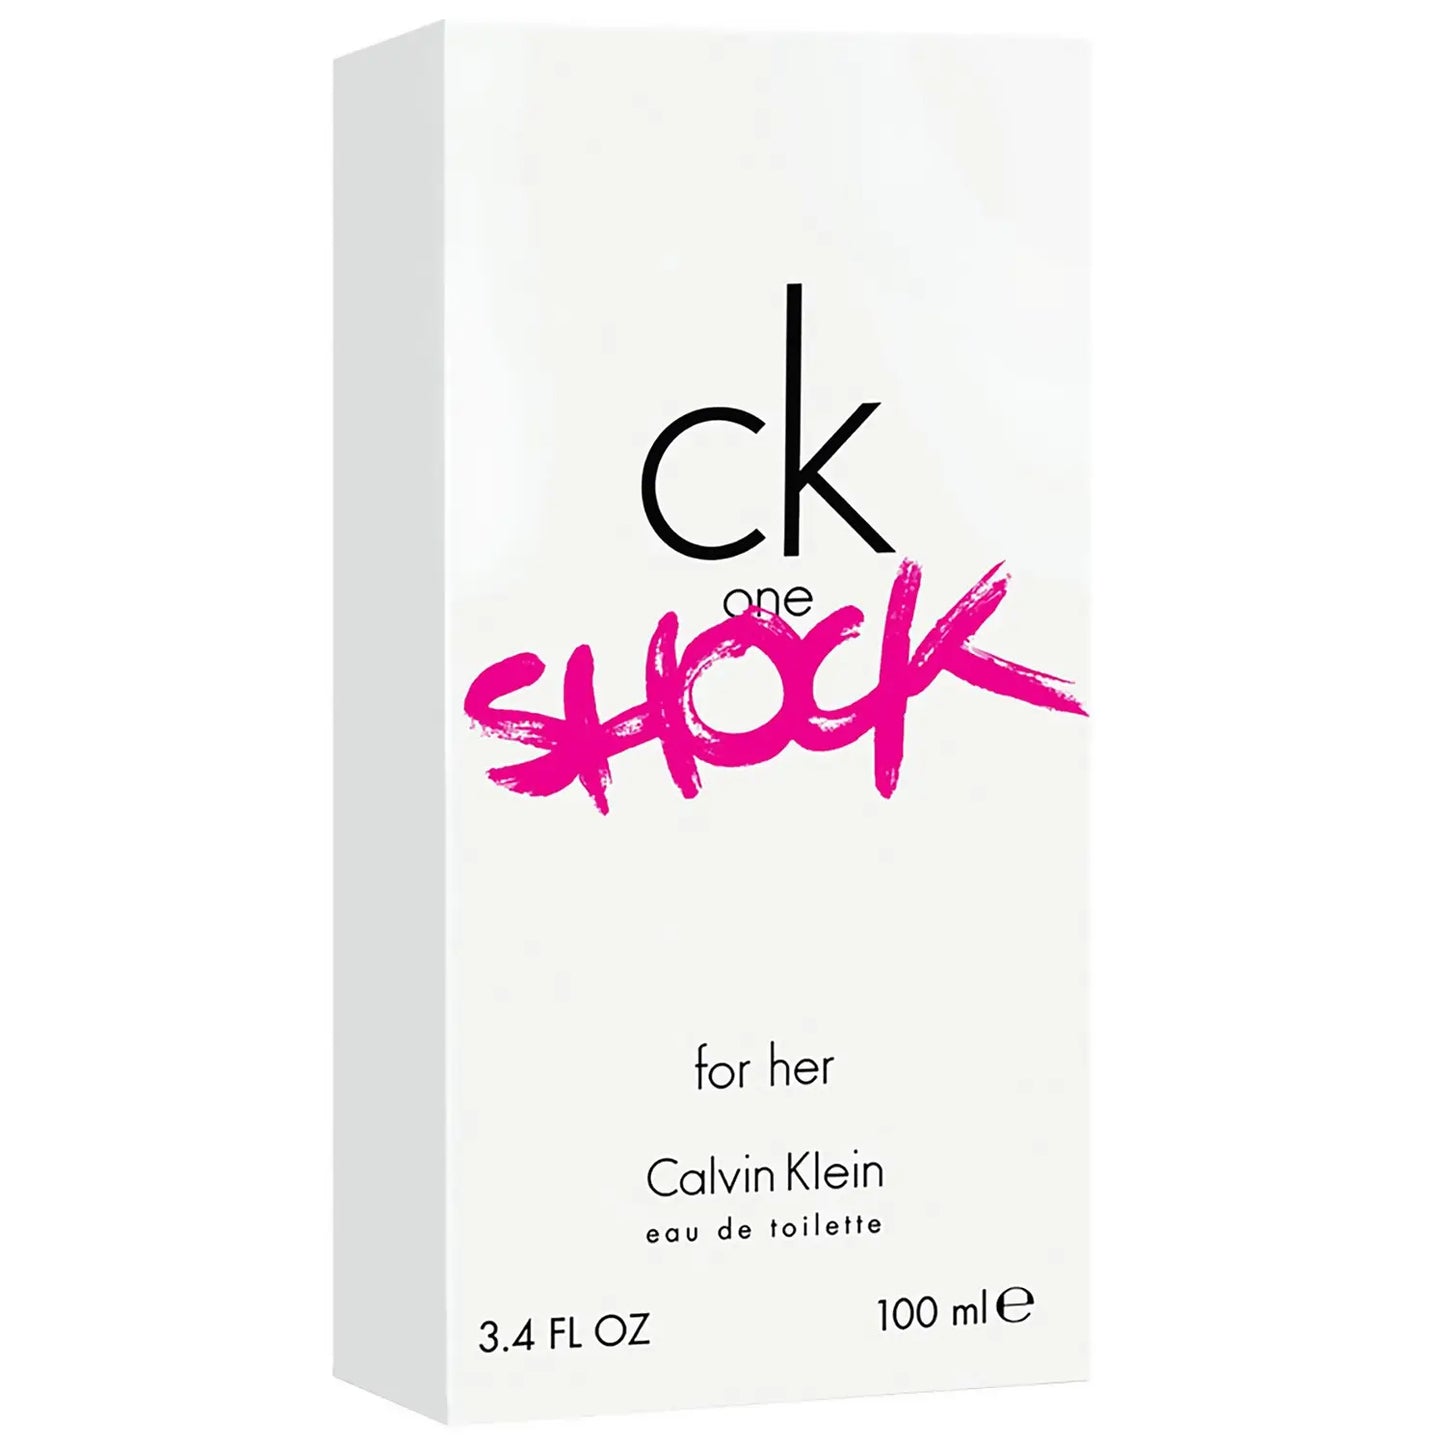 Calvin Klein CK One Shock For Her Eau de Toilette Spray 100ml